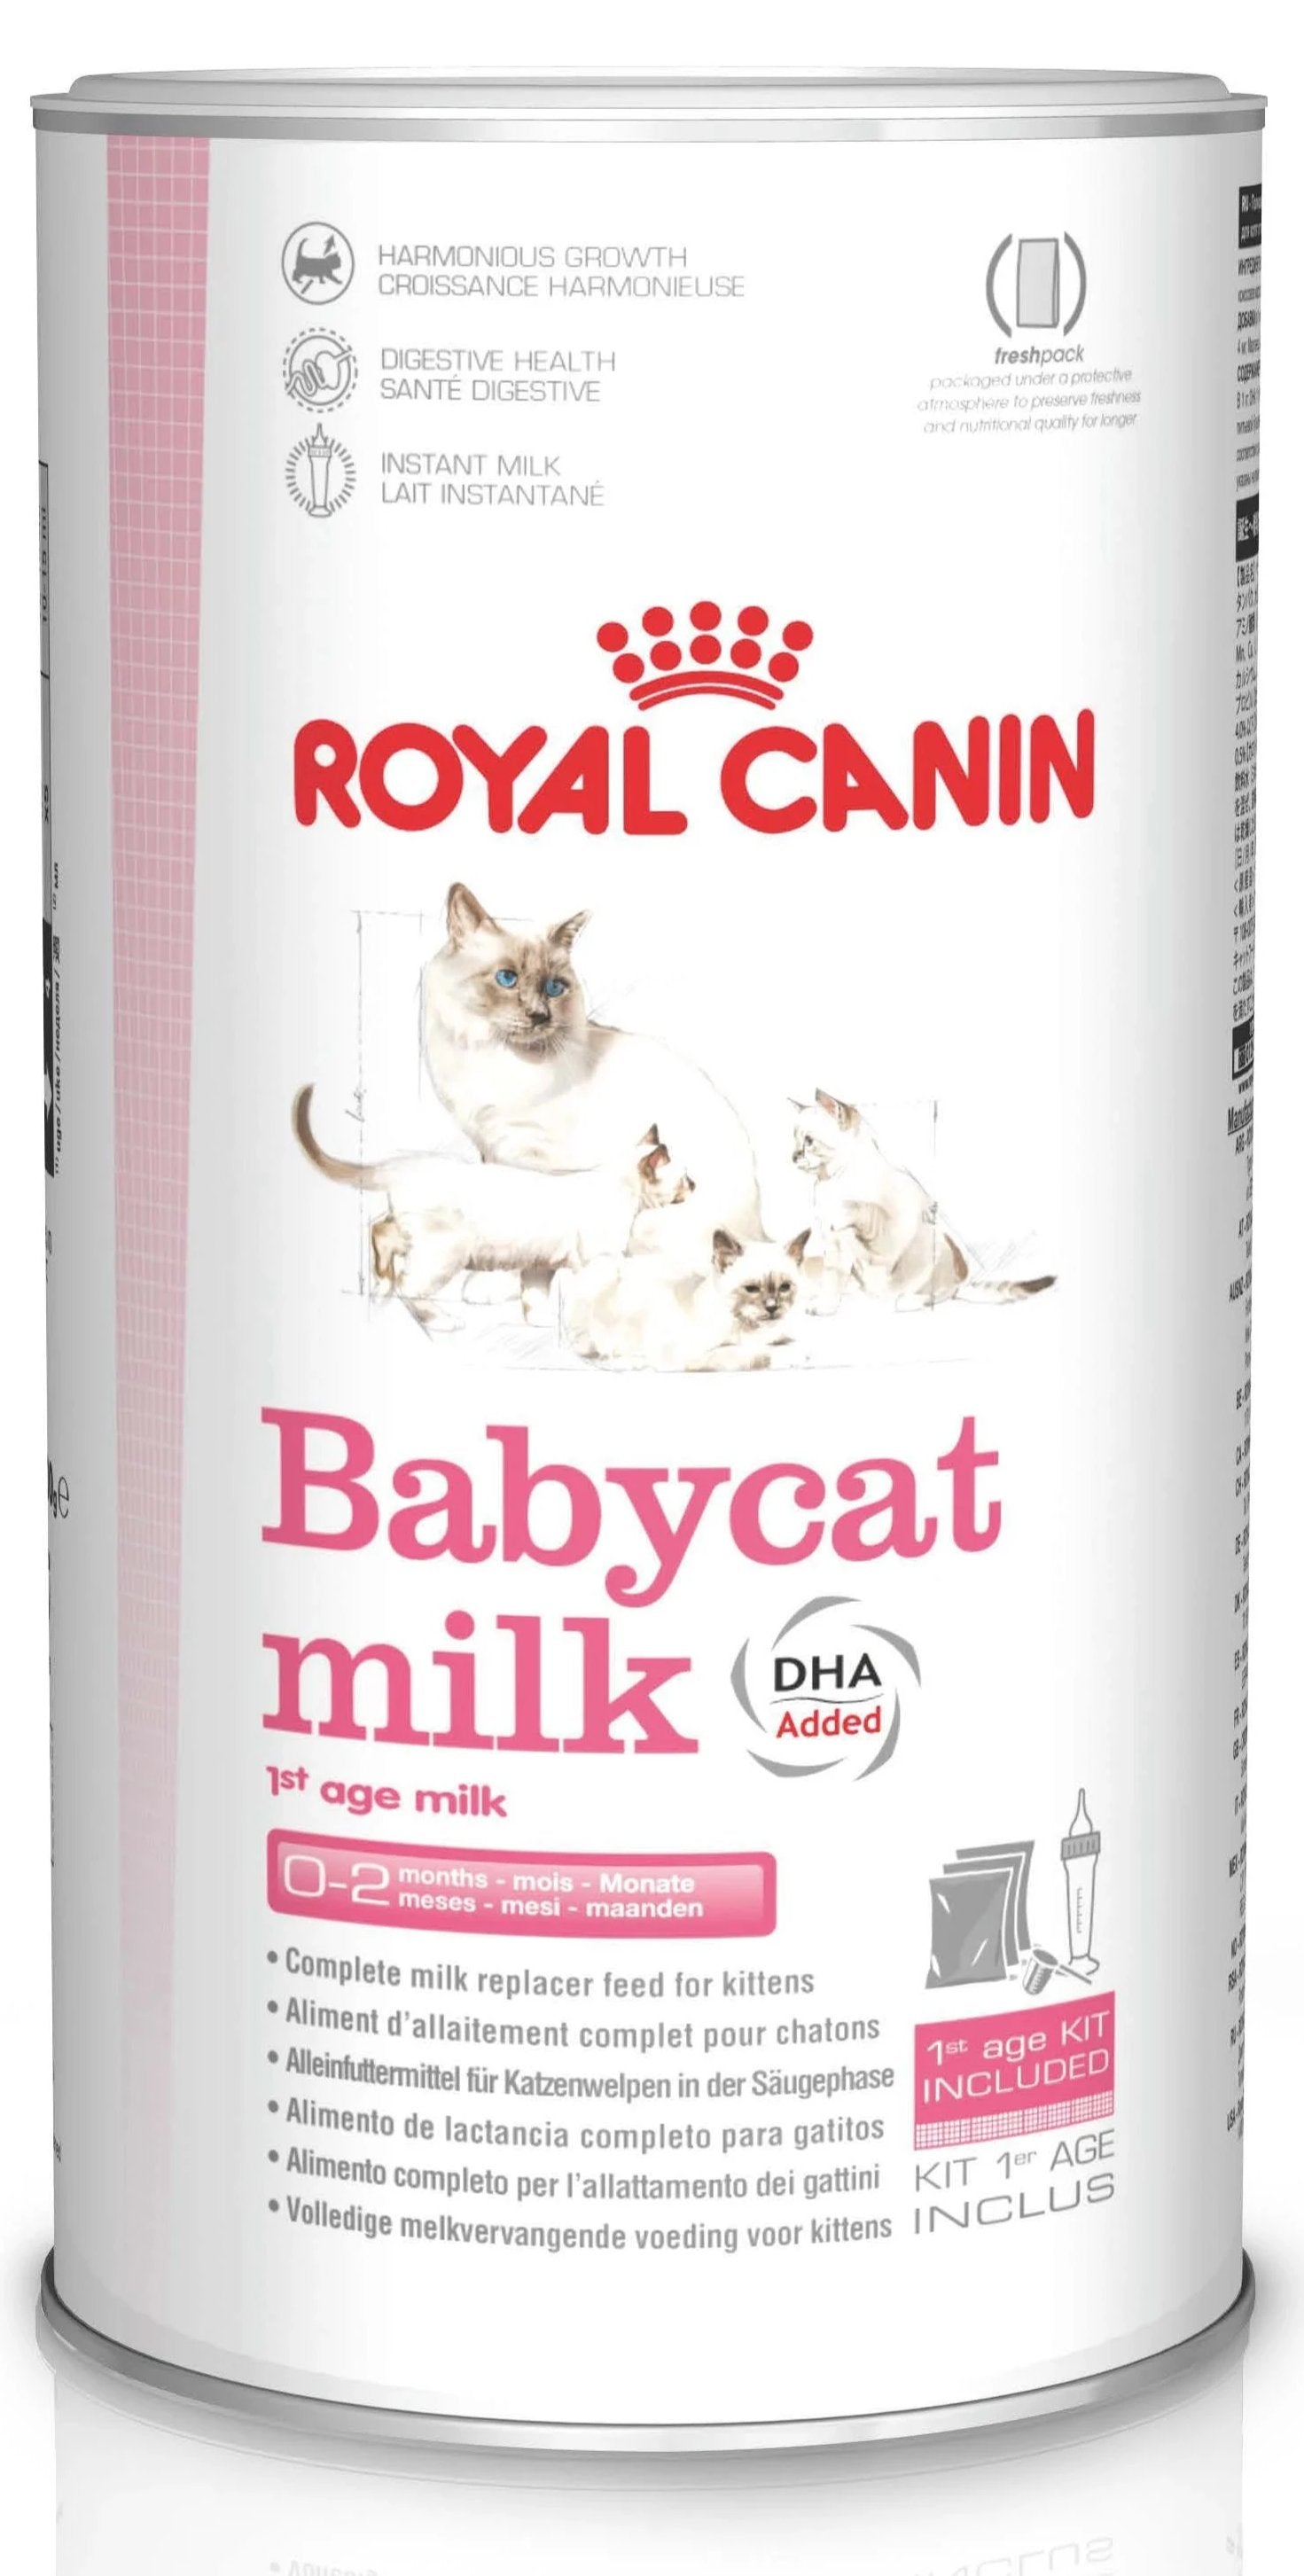 Royal Canin Babycat Kitten Milk